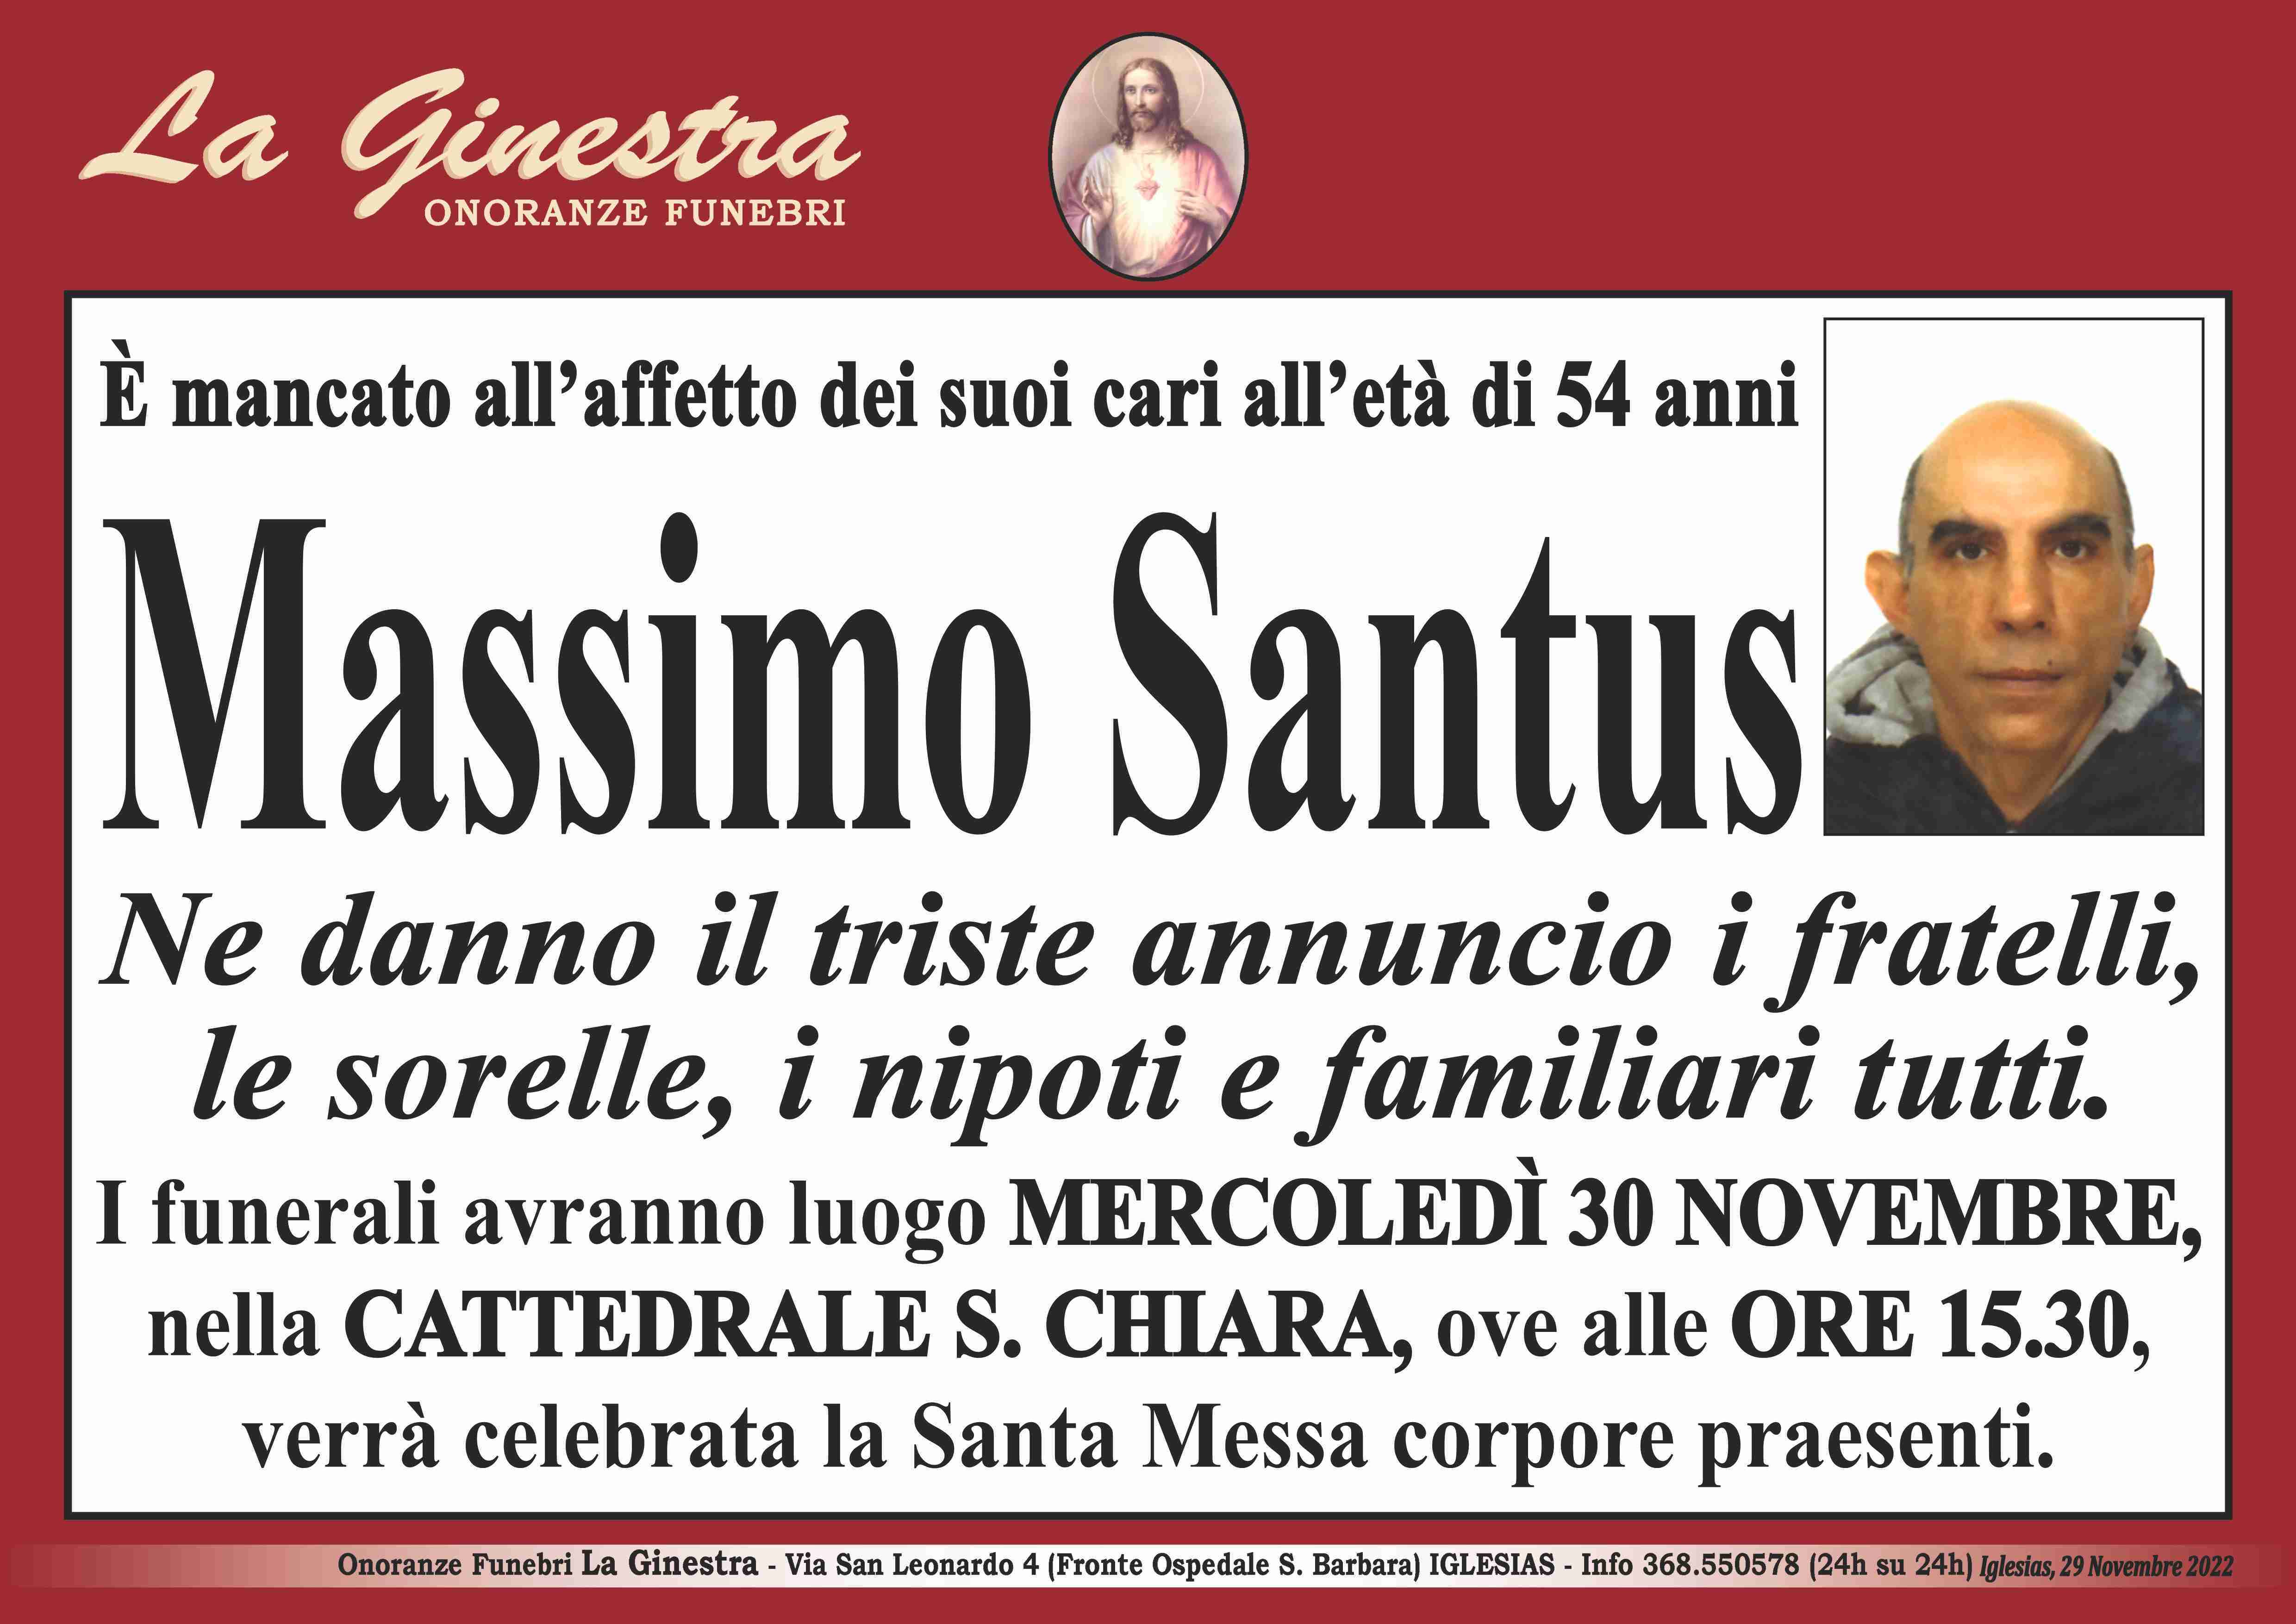 Massimo Santus